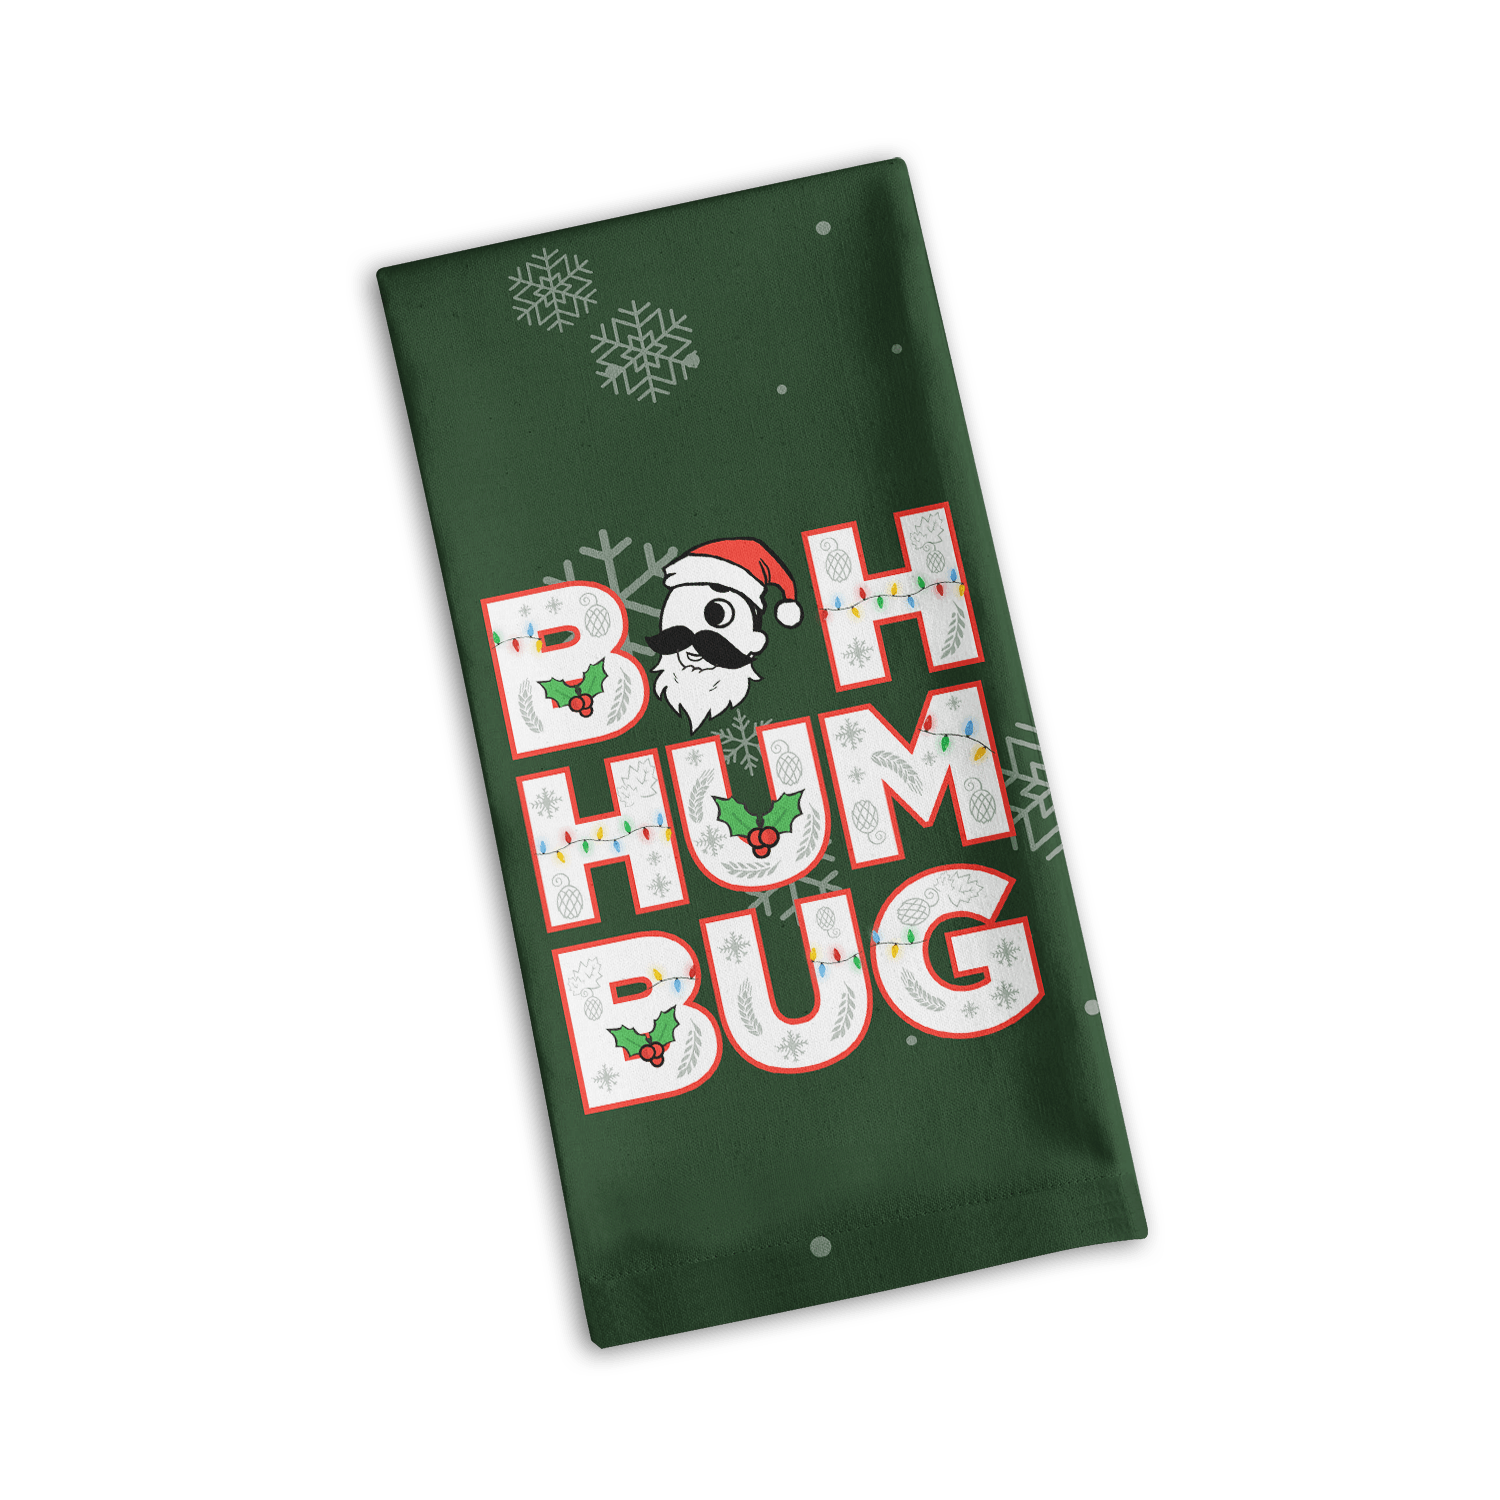 Santa Boh Hum Bug / Kitchen Towel - Route One Apparel